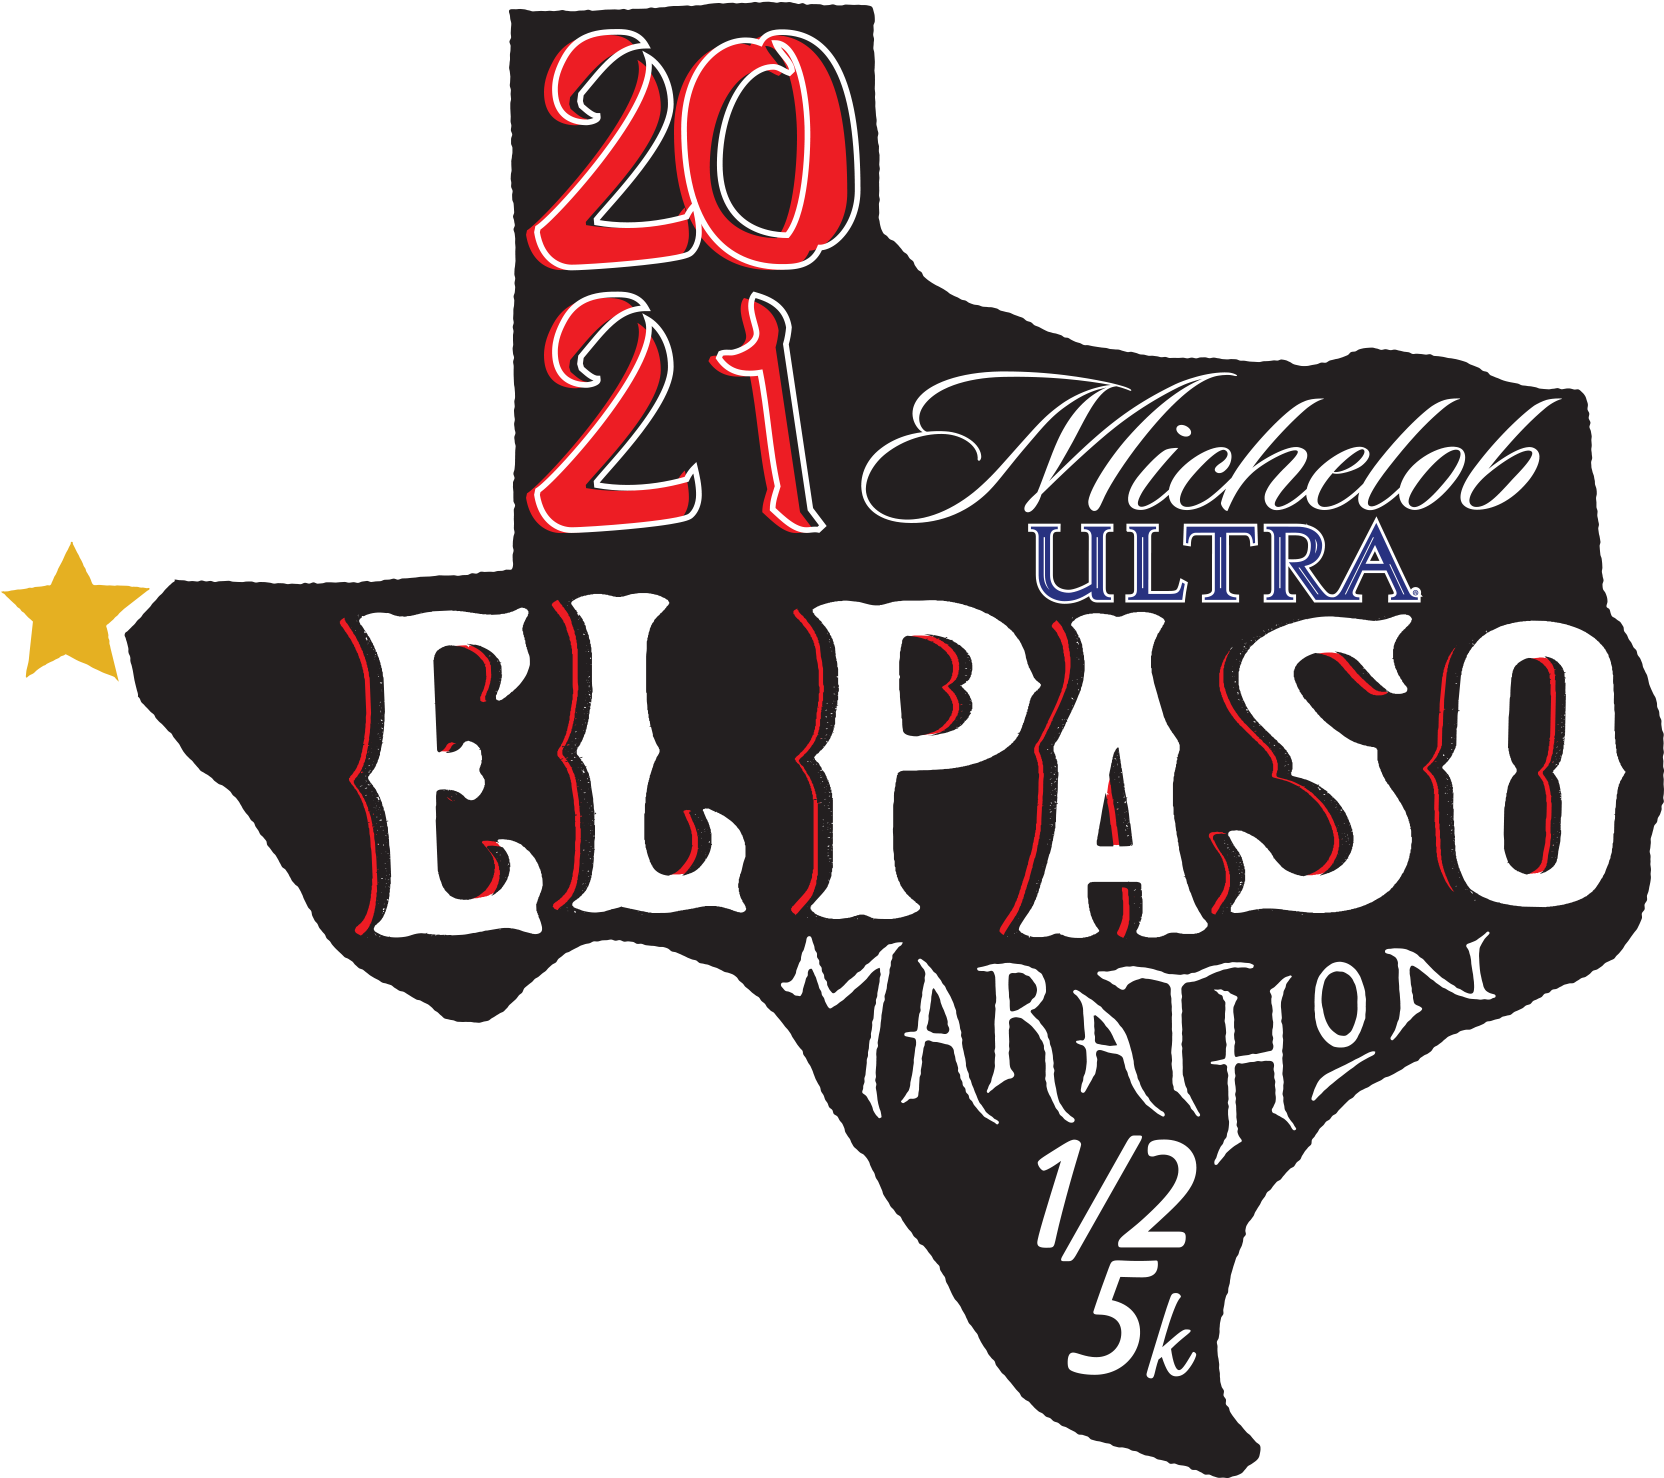 2021 Michelob Ultra El Paso Marathon Logo PNG image